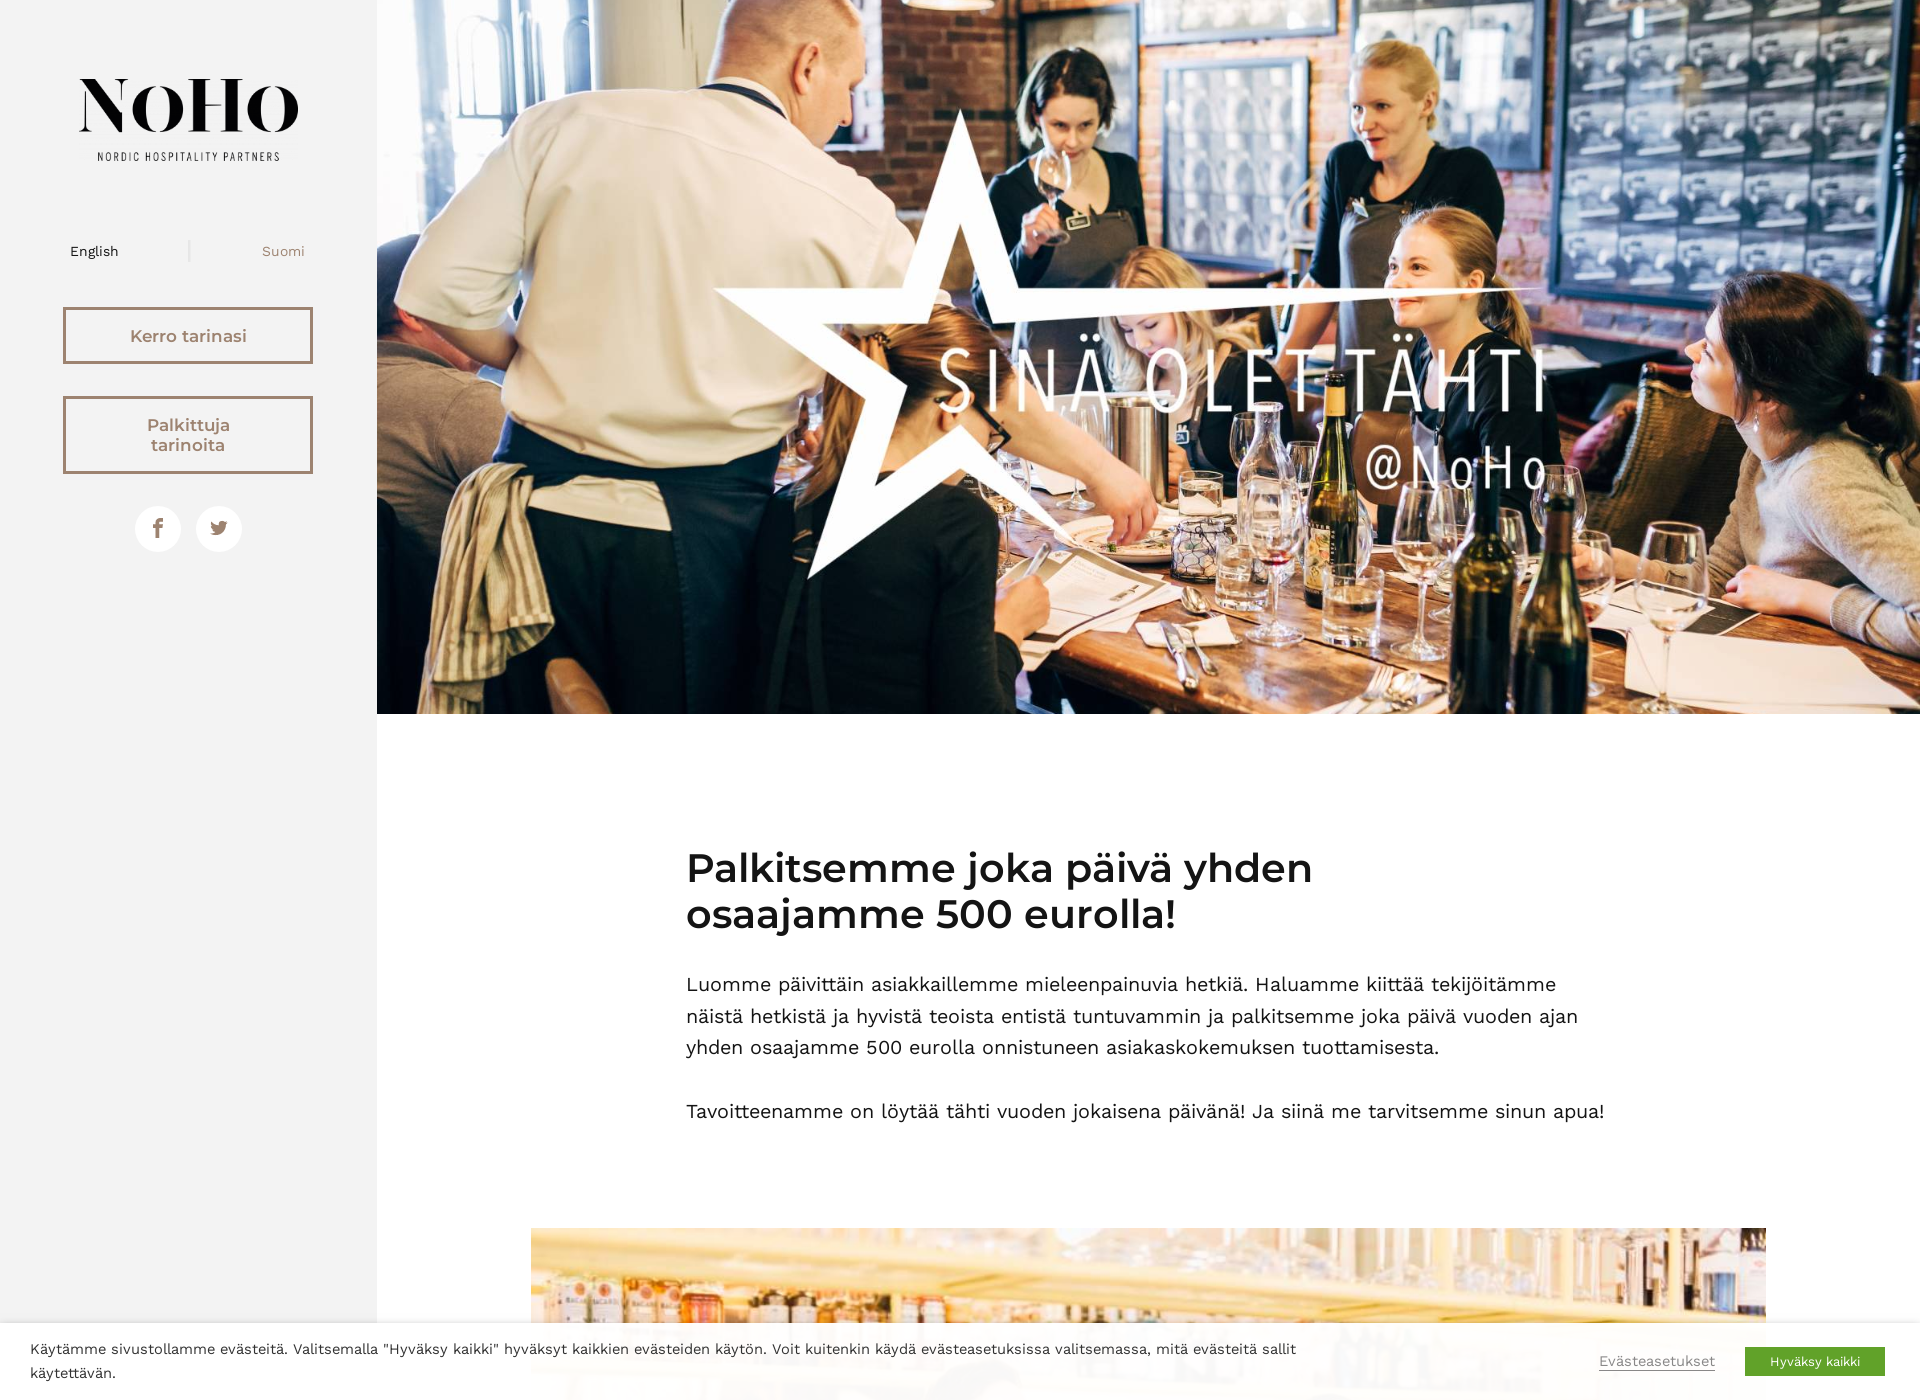 Skärmdump för sinaolettahti.fi